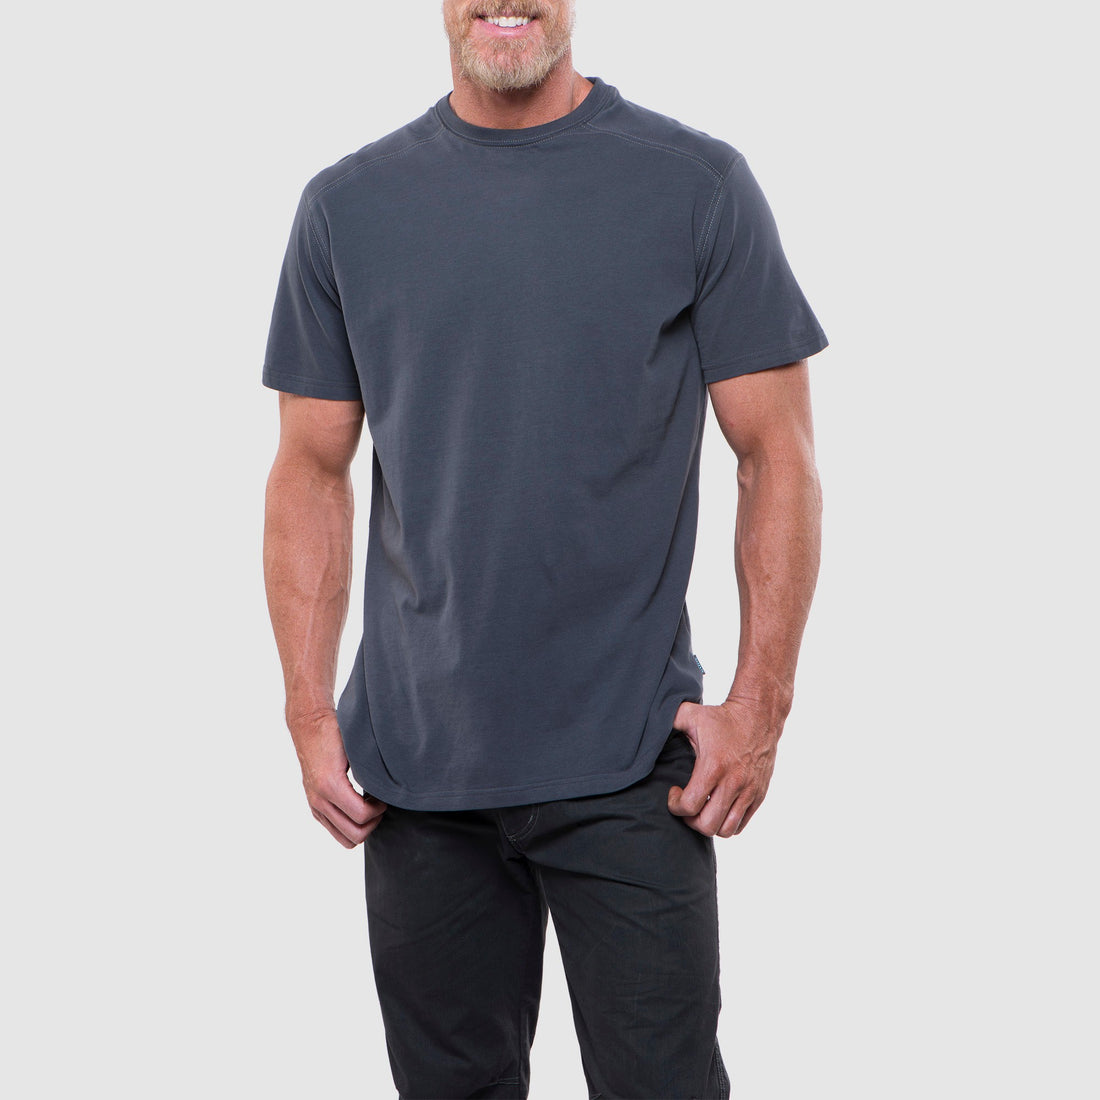 Bravado T-Shirt - Carbon